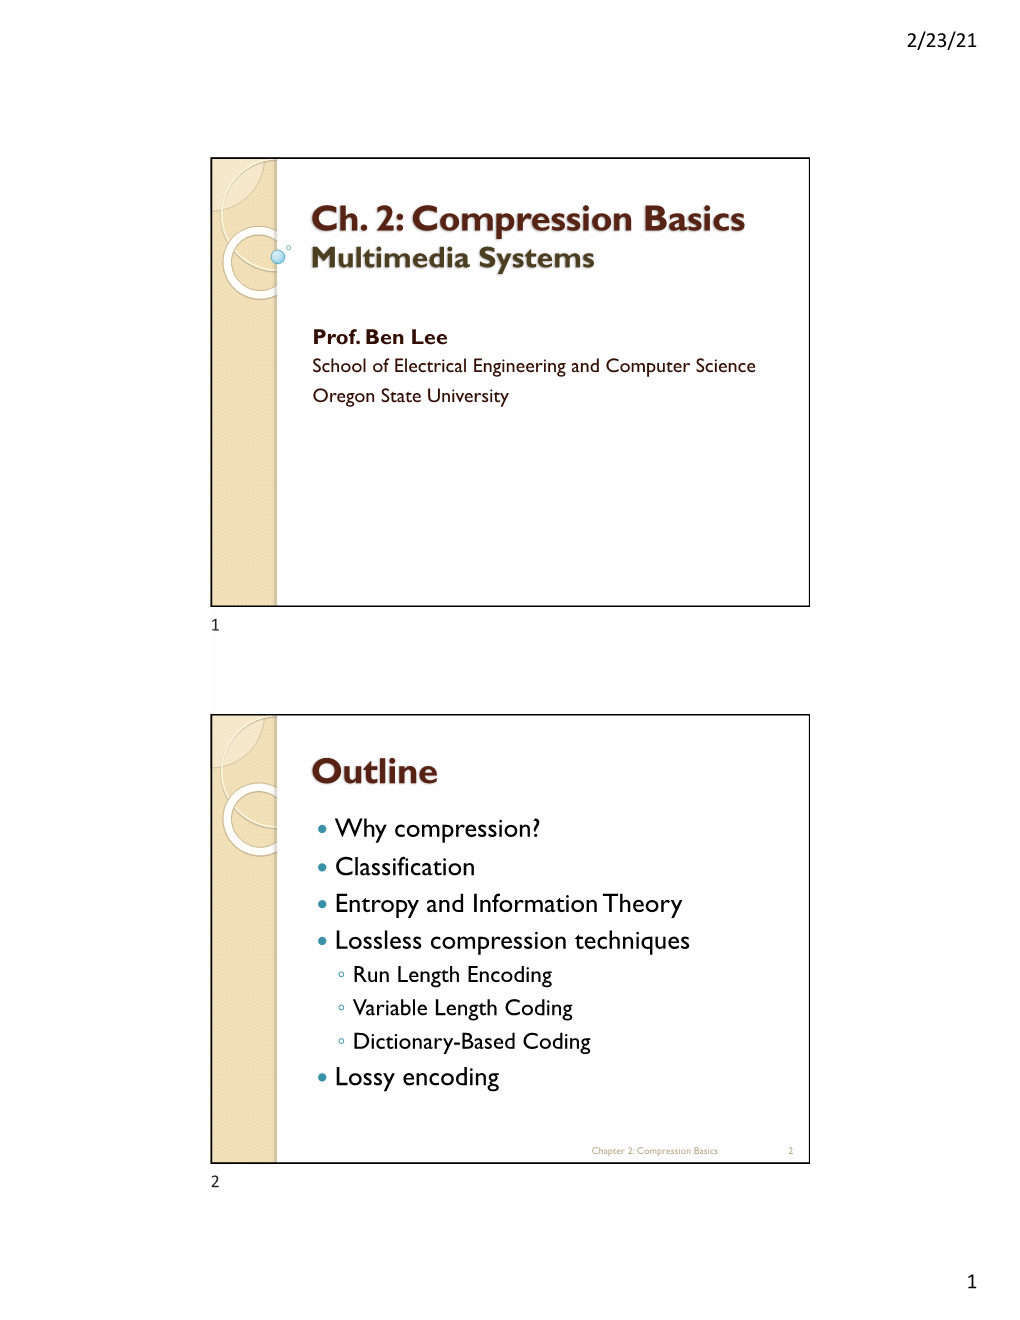 Compression Basics Multimedia Systems